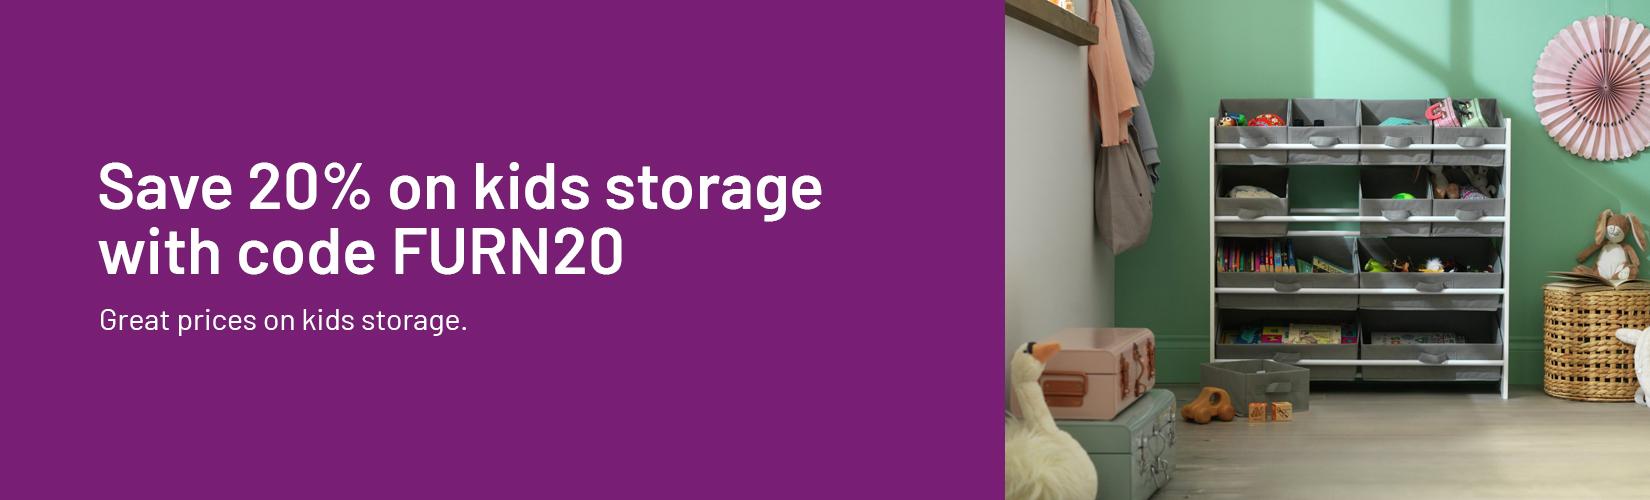 Save 20% on kids storage with code FURN20.